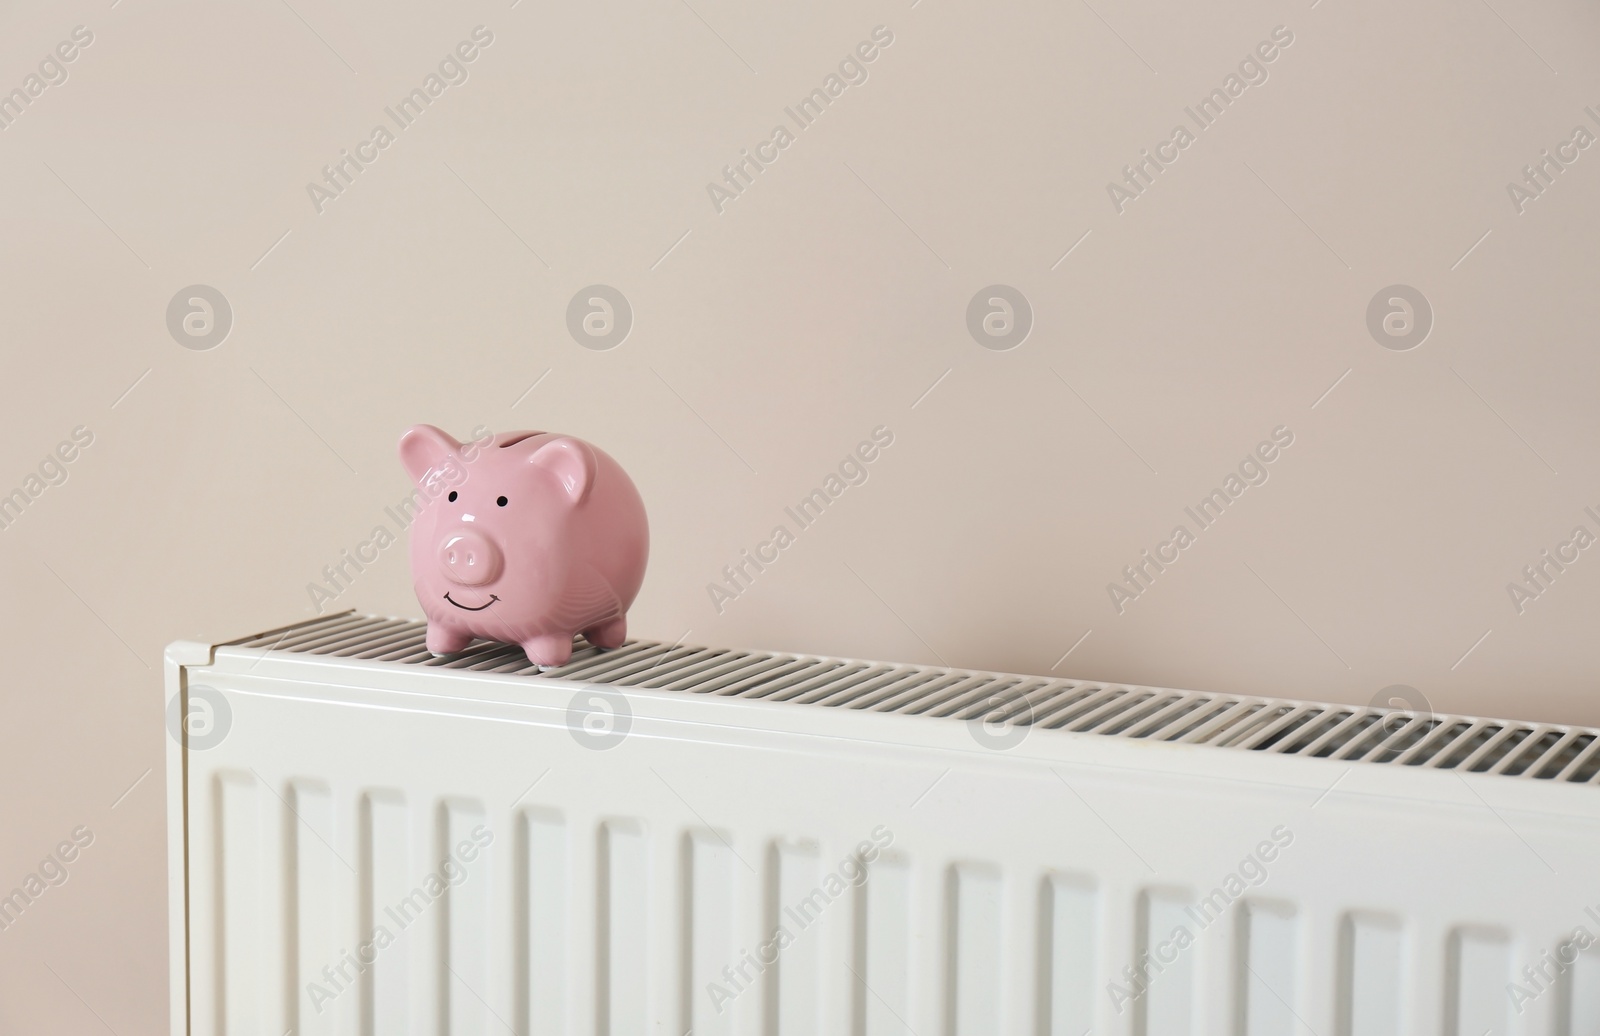 Photo of Piggy bank on heating radiator against light background